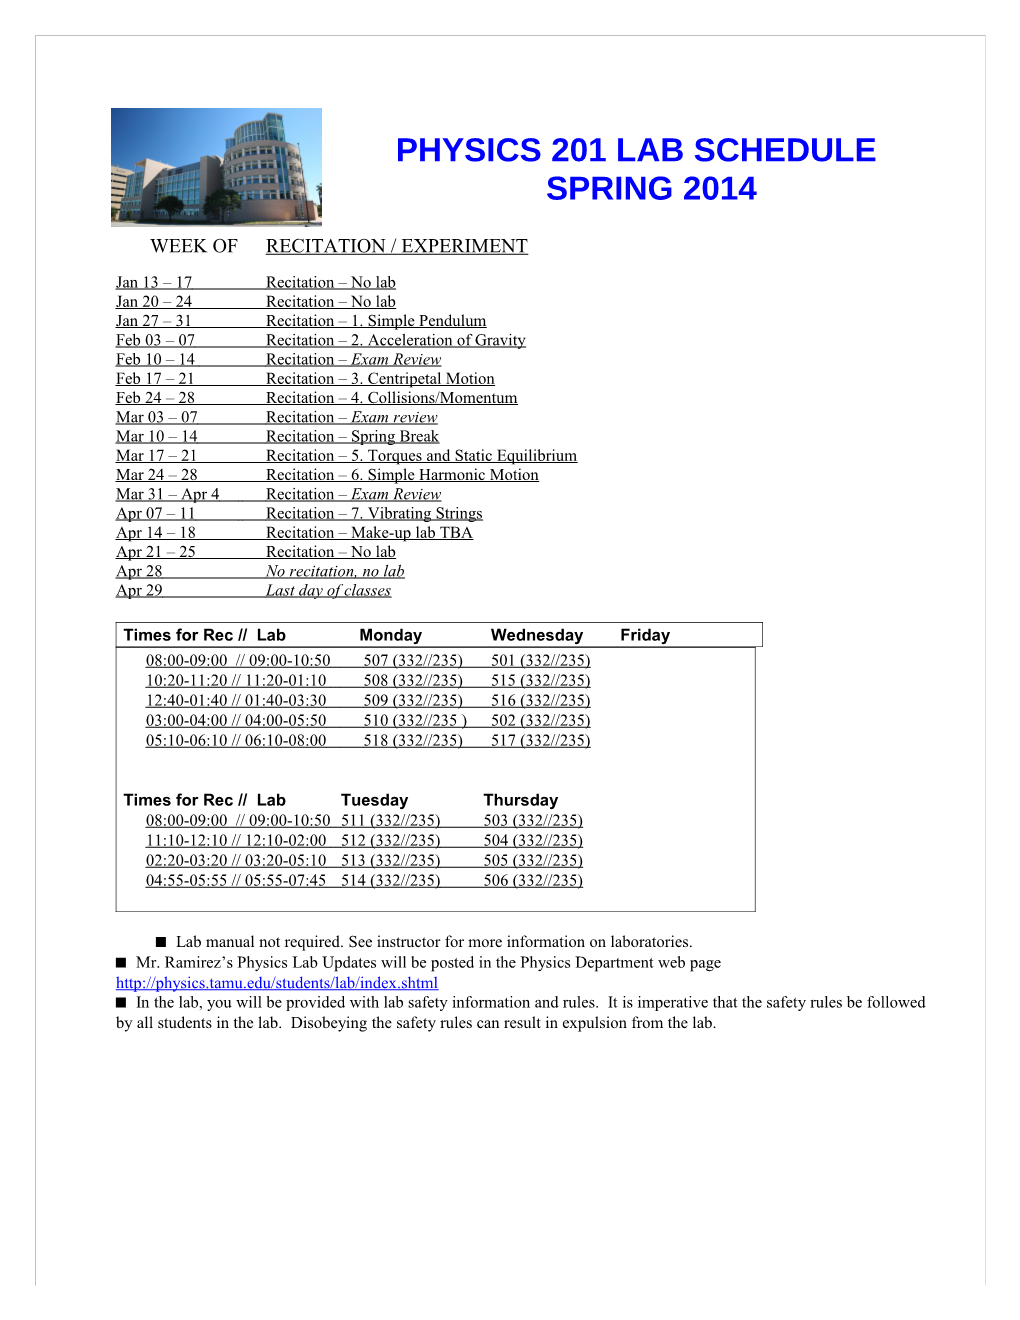 Physics 202 Laboratory Schedule